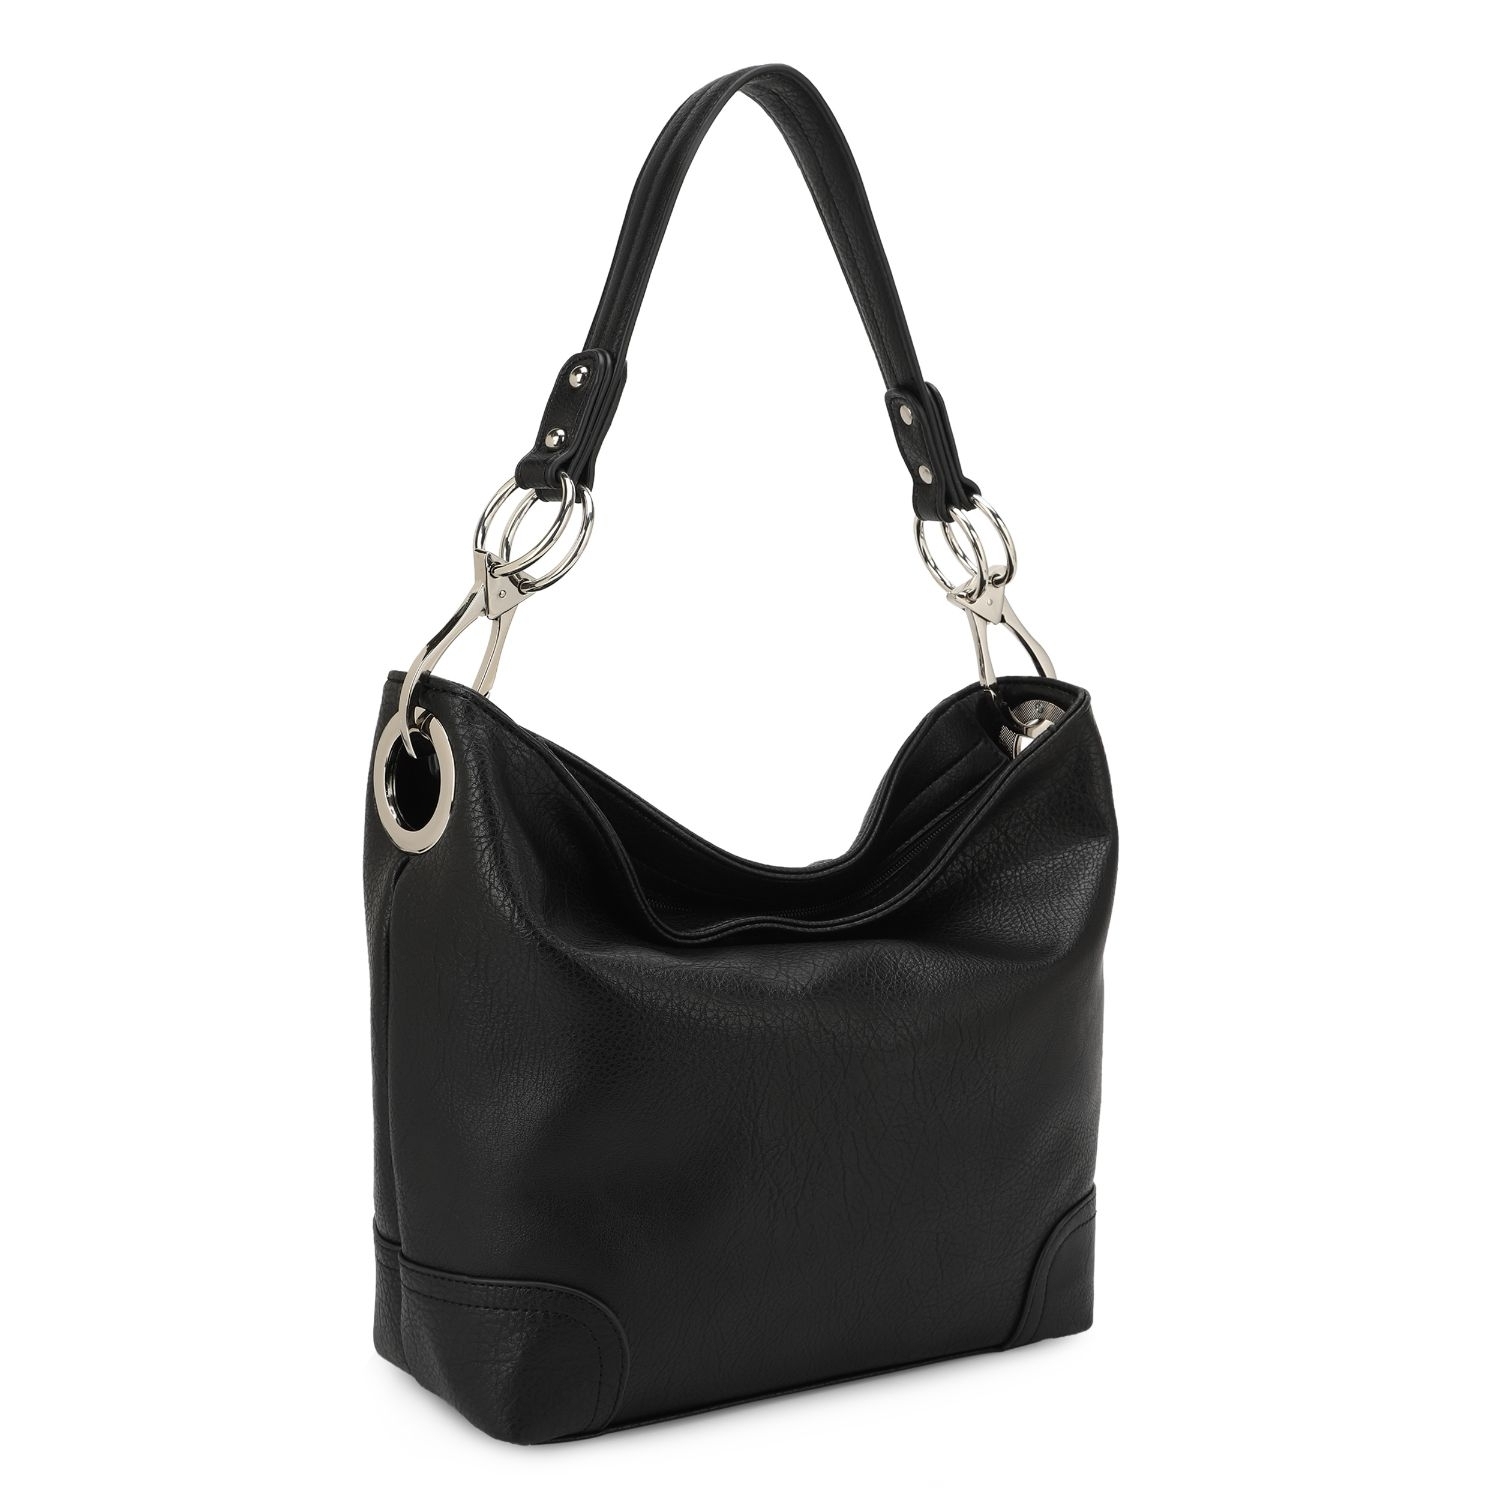 MKF Collection Emily Soft Vegan Leather Hobo Handbag By Mia K. - Light Coffee